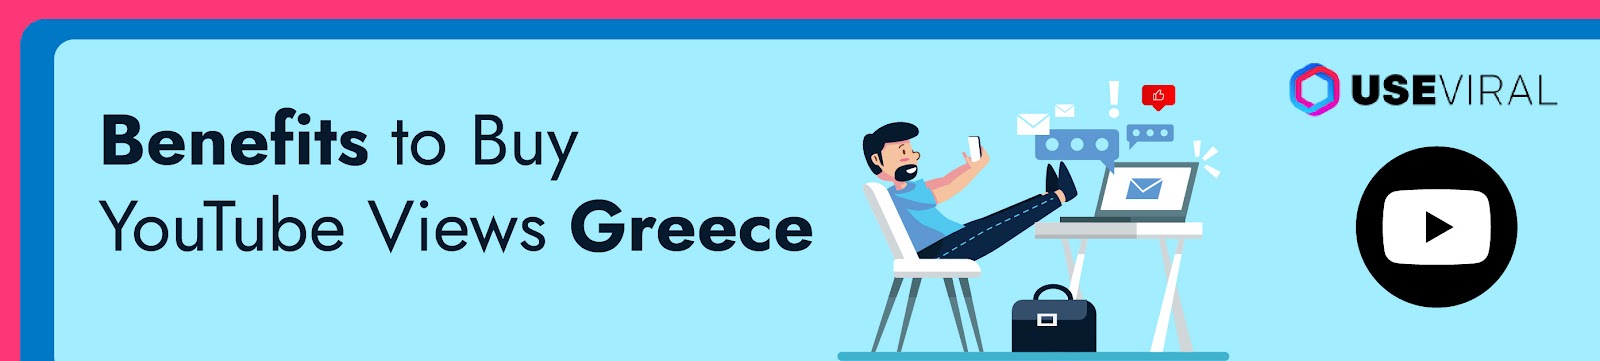 Benefits to Buy YouTube Views Greece